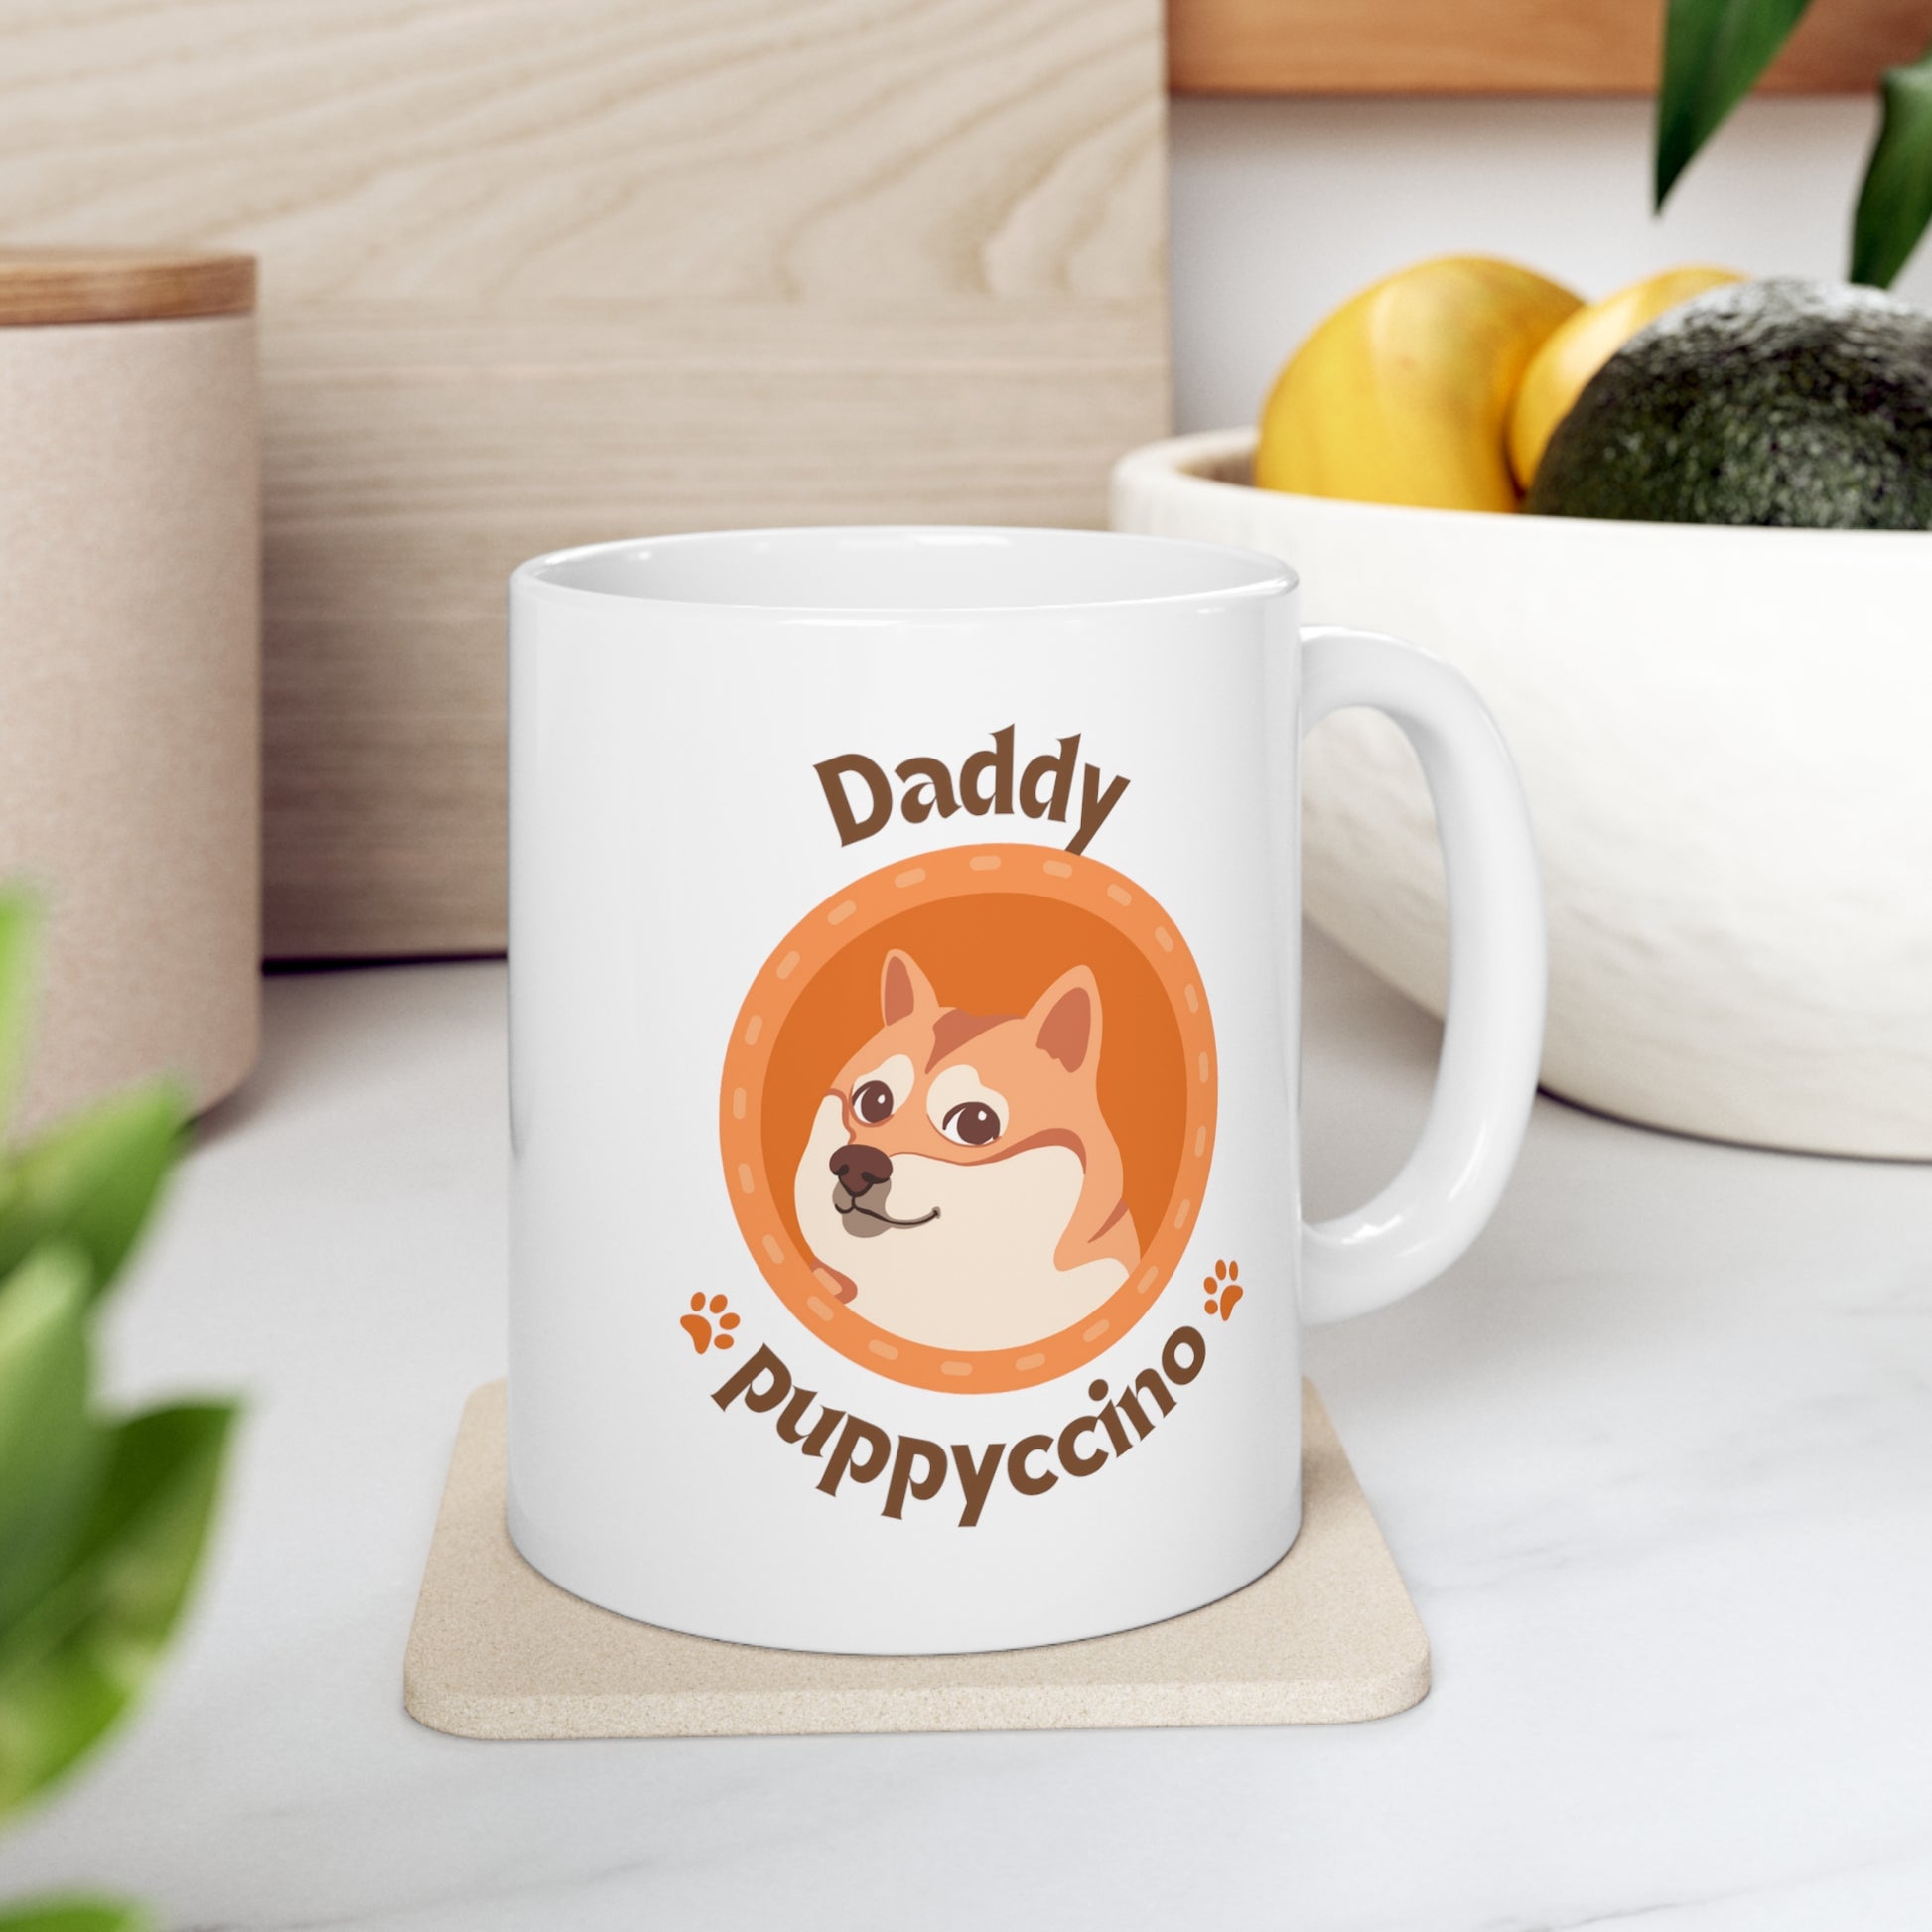 Daddy Puppyccino Ceramic Mug for Dog Lover